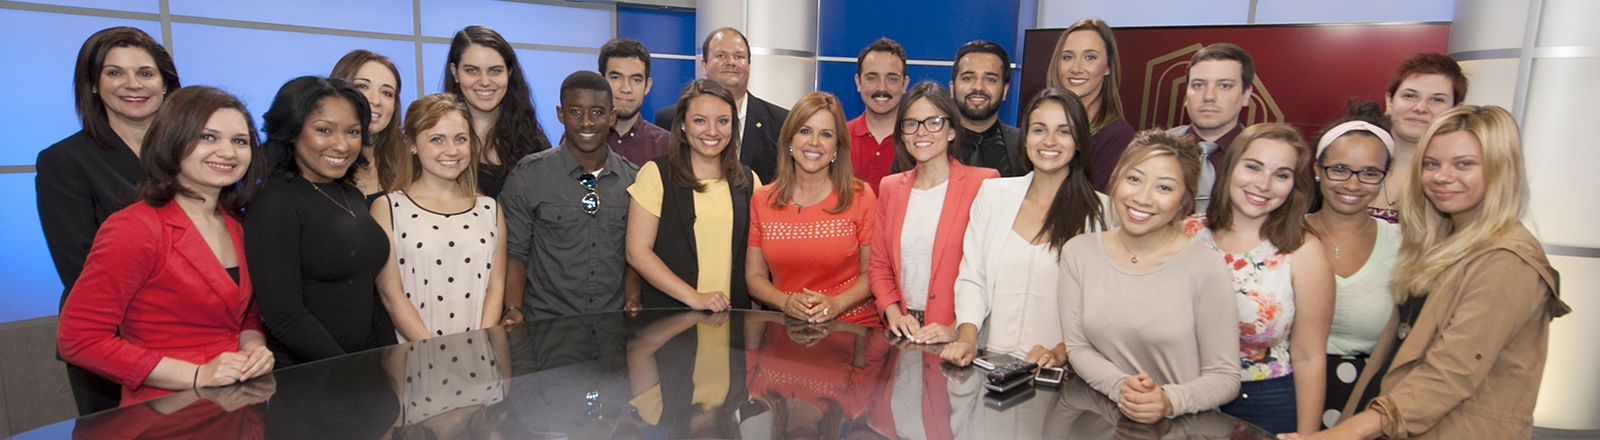 Group Photo in Broadcast Studio